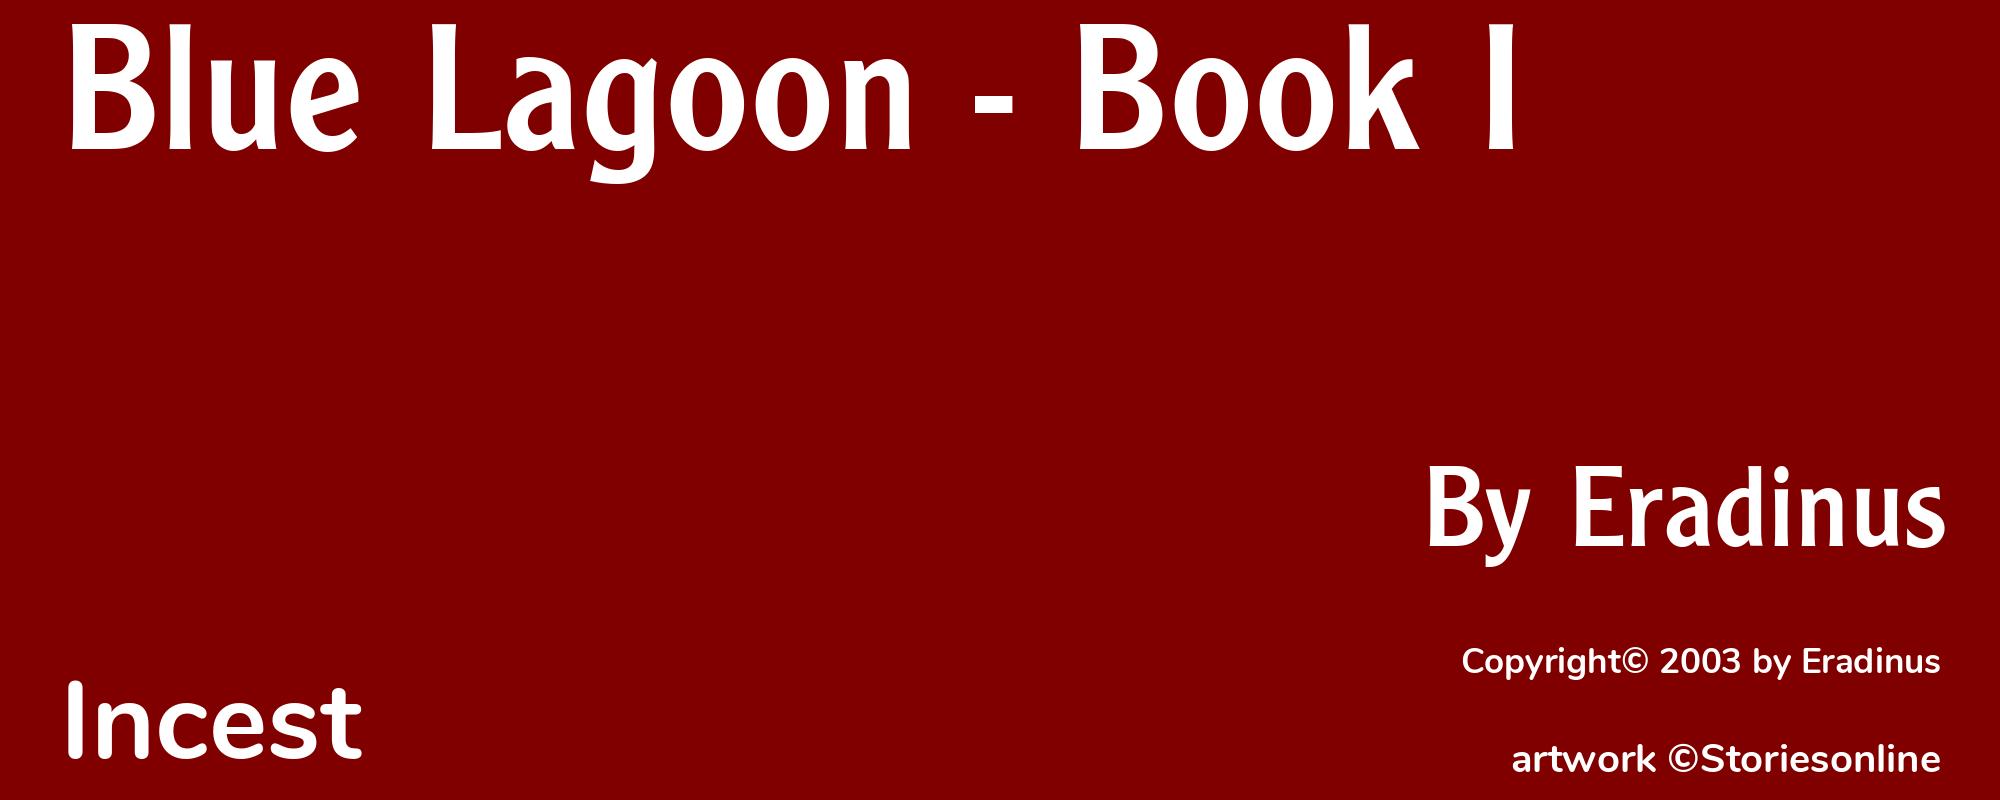 Blue Lagoon - Book I - Cover